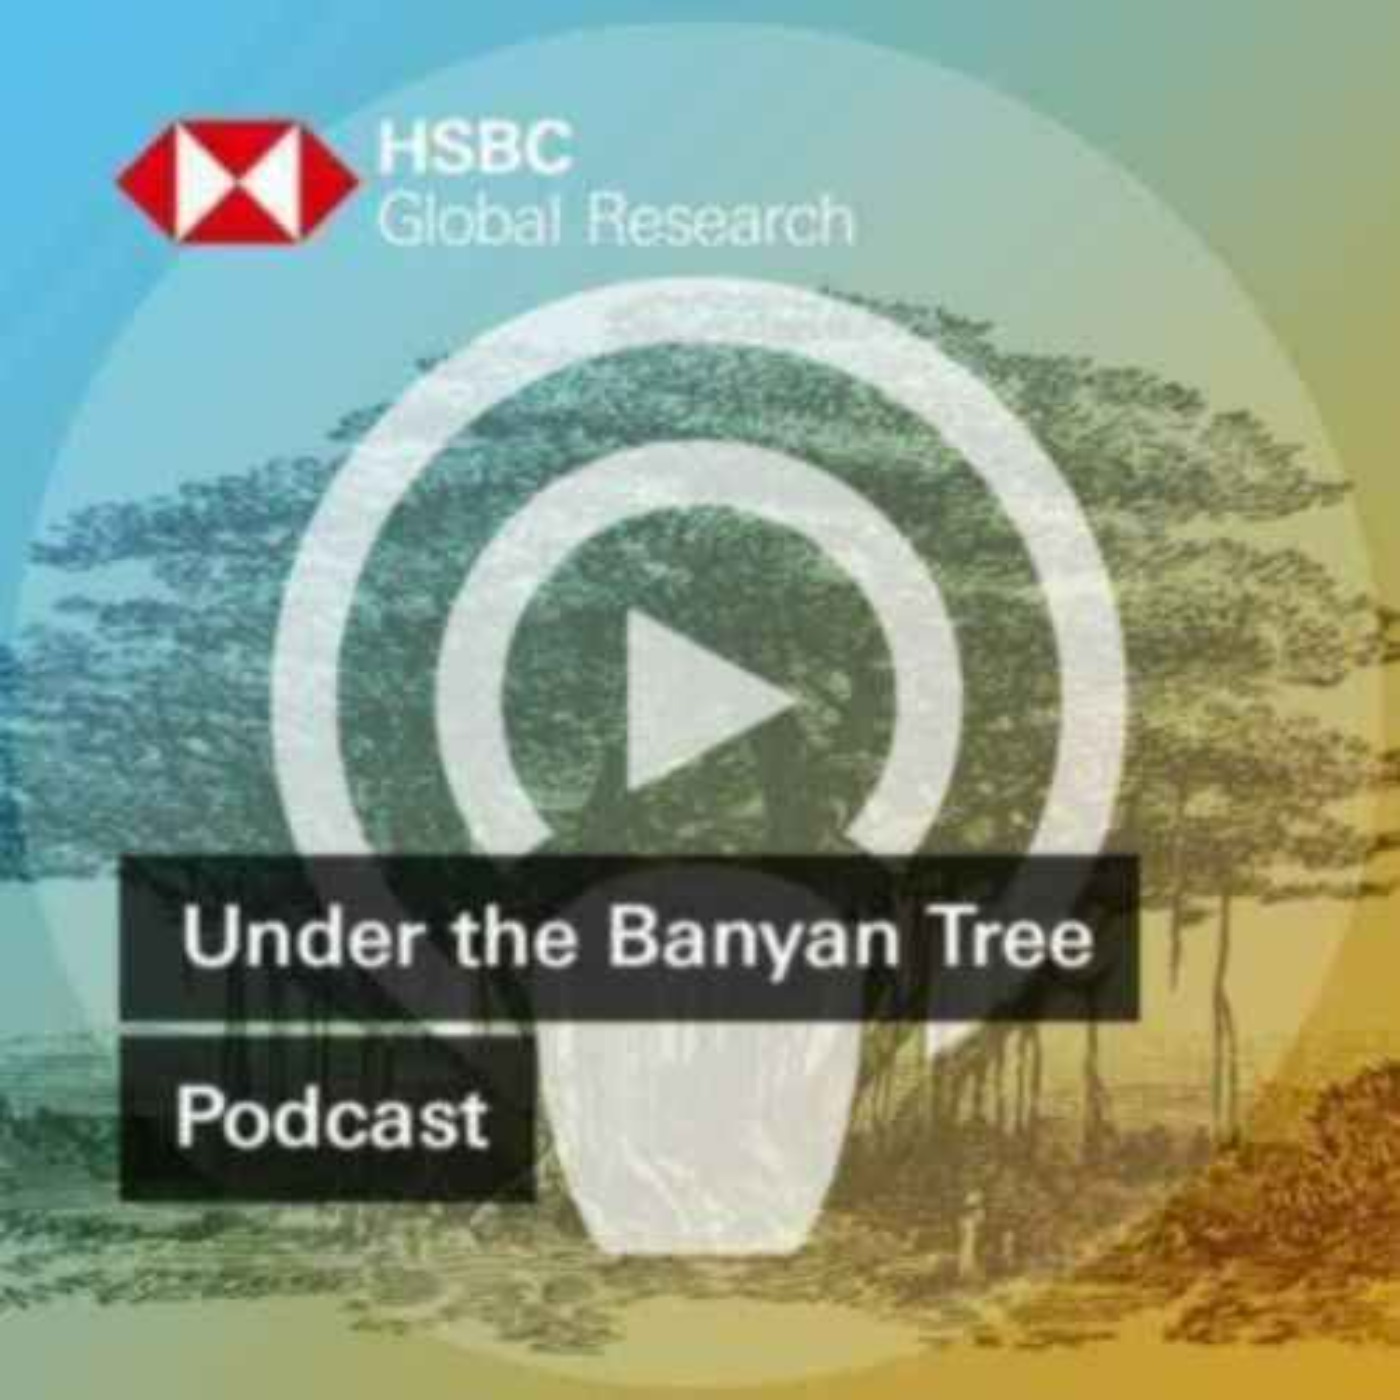 Under the Banyan Tree - The ripple effect of China's slowdown